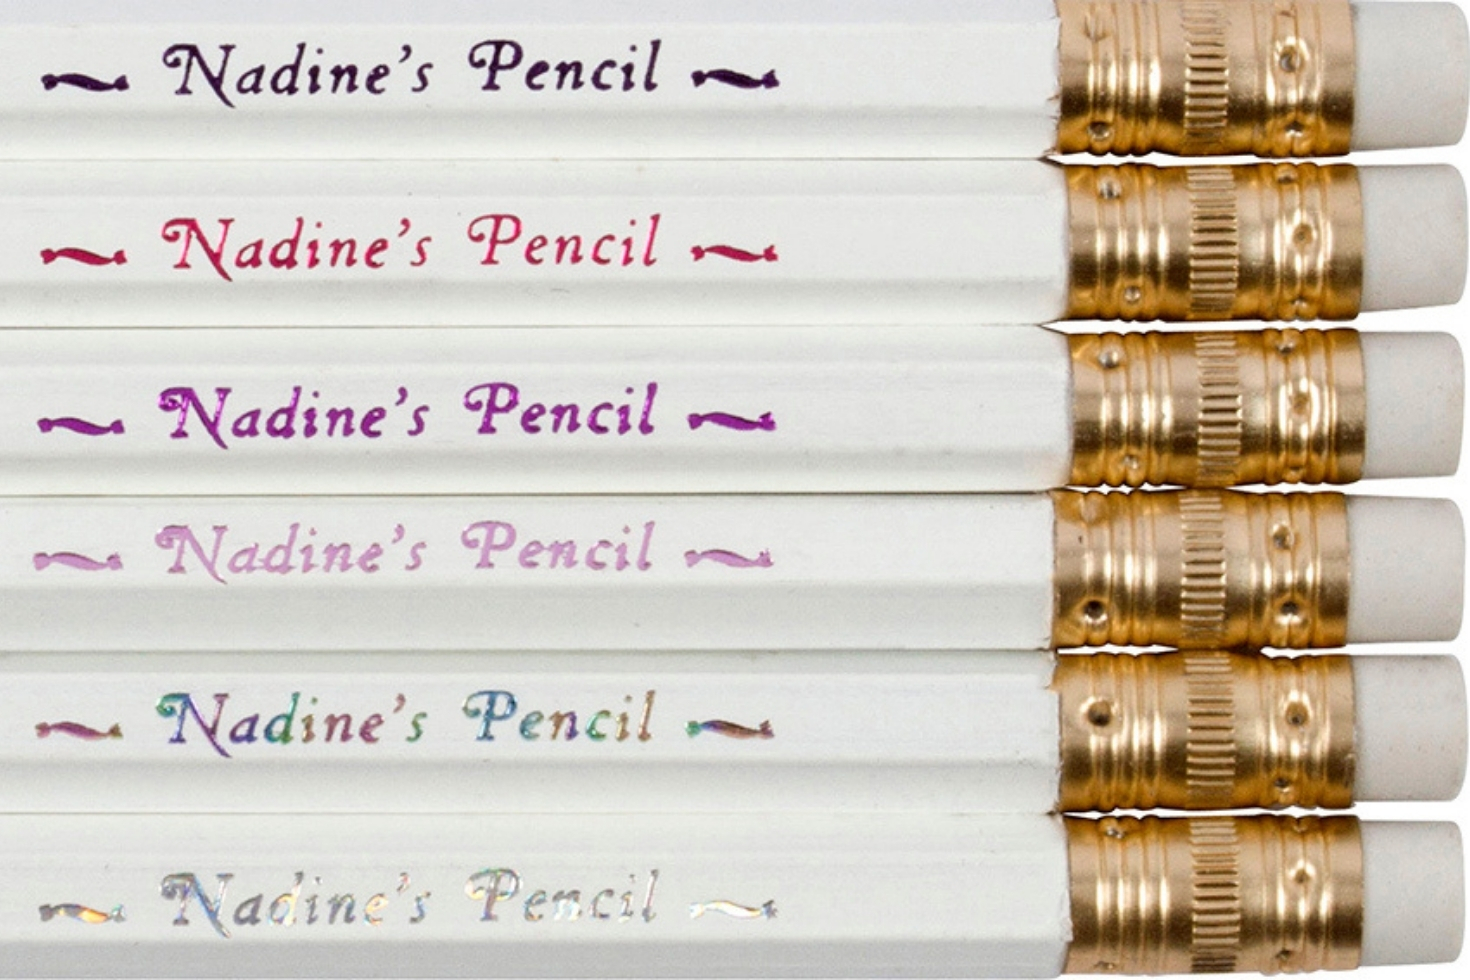 "Nadine's Pencil" printed on multiple white pencils